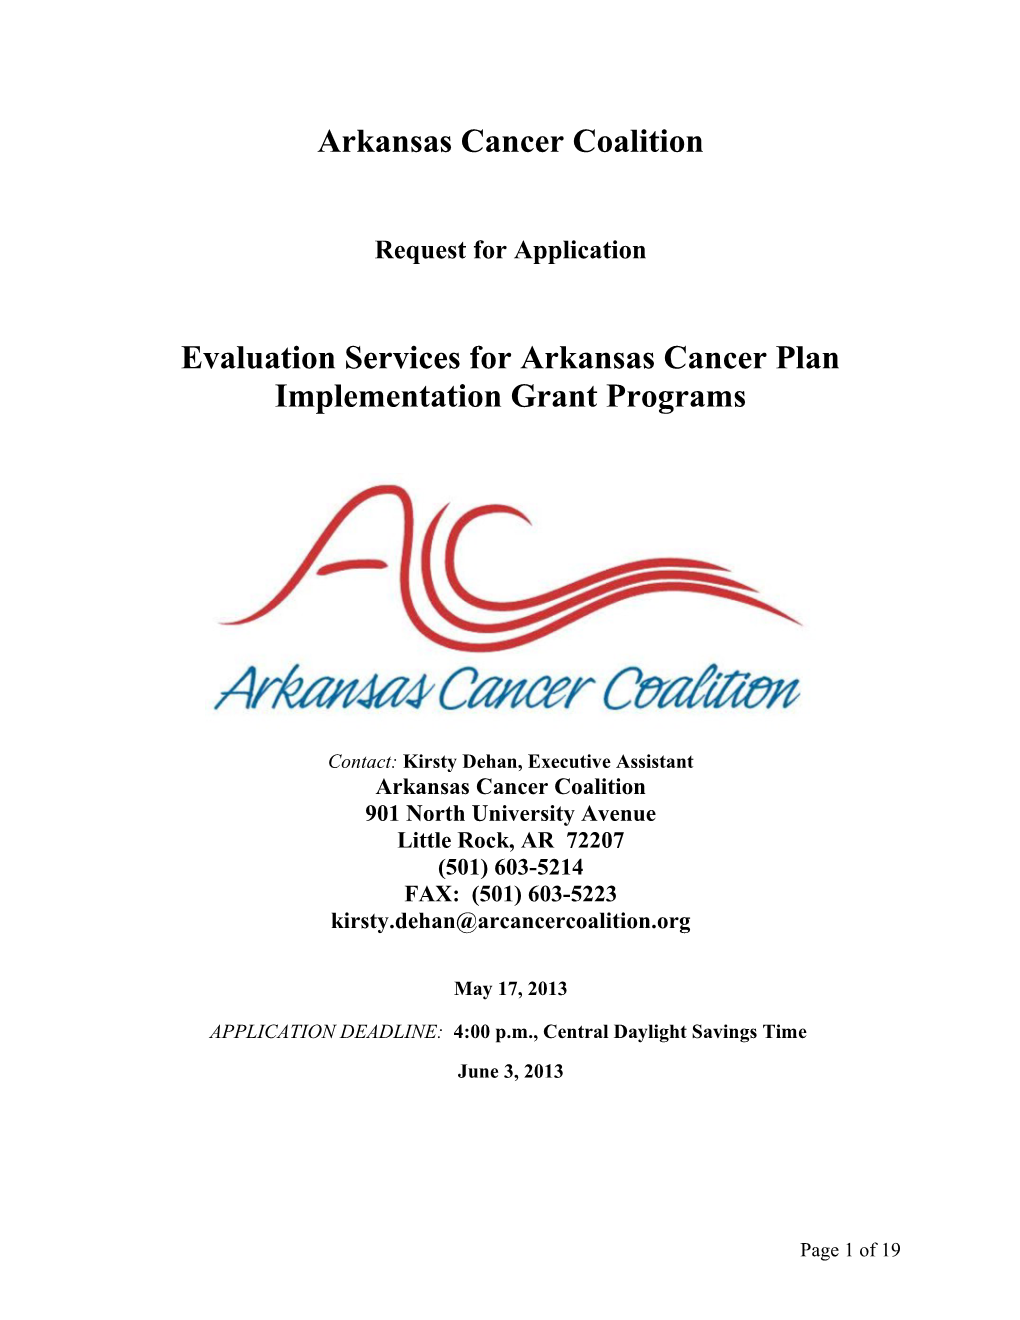 Evaluation Services for Arkansas Cancer Plan Implementation Grant Programs